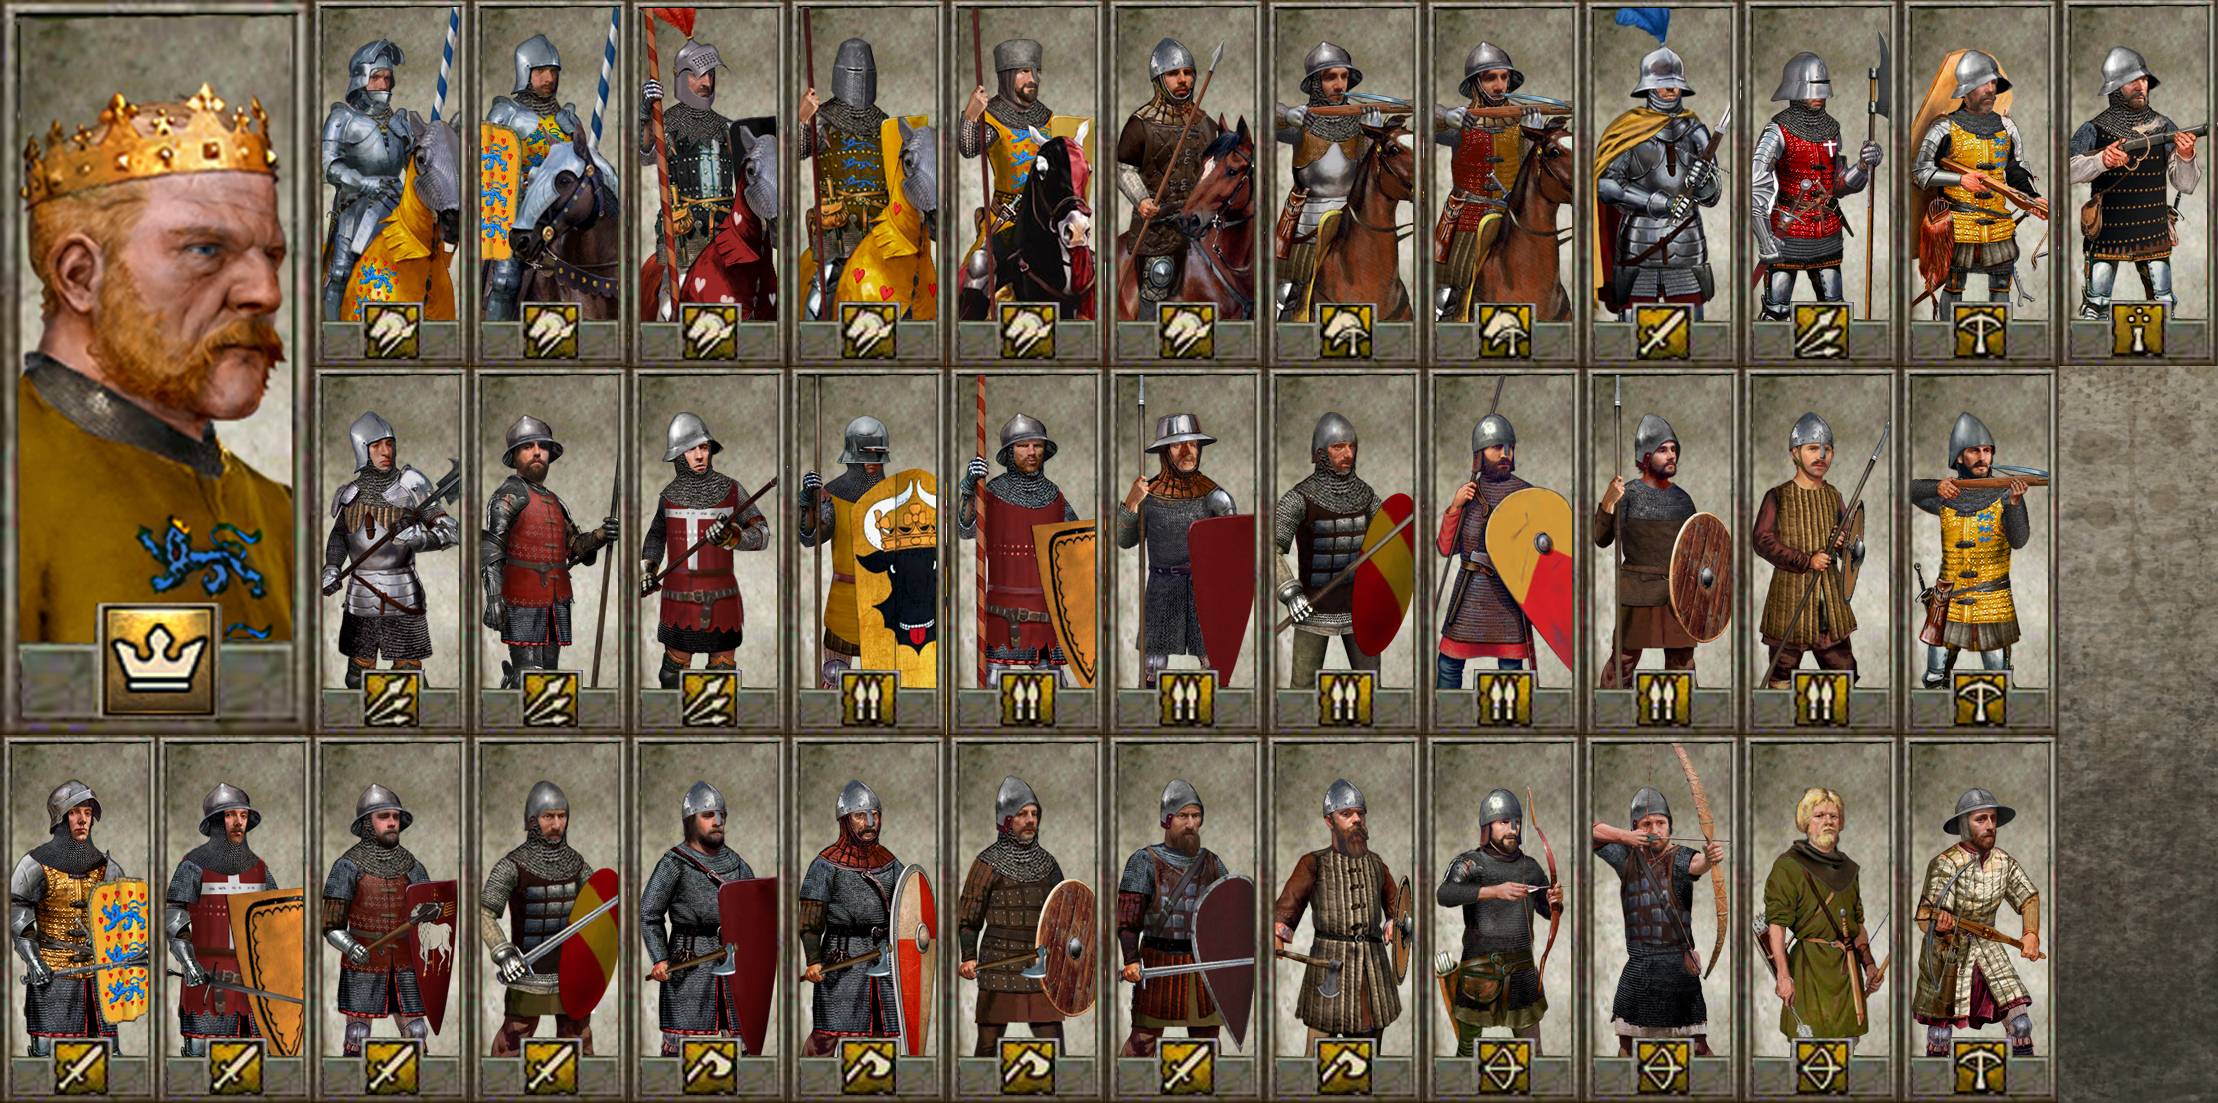 medieval kingdoms total war 1212 ad units armor melee damage attack